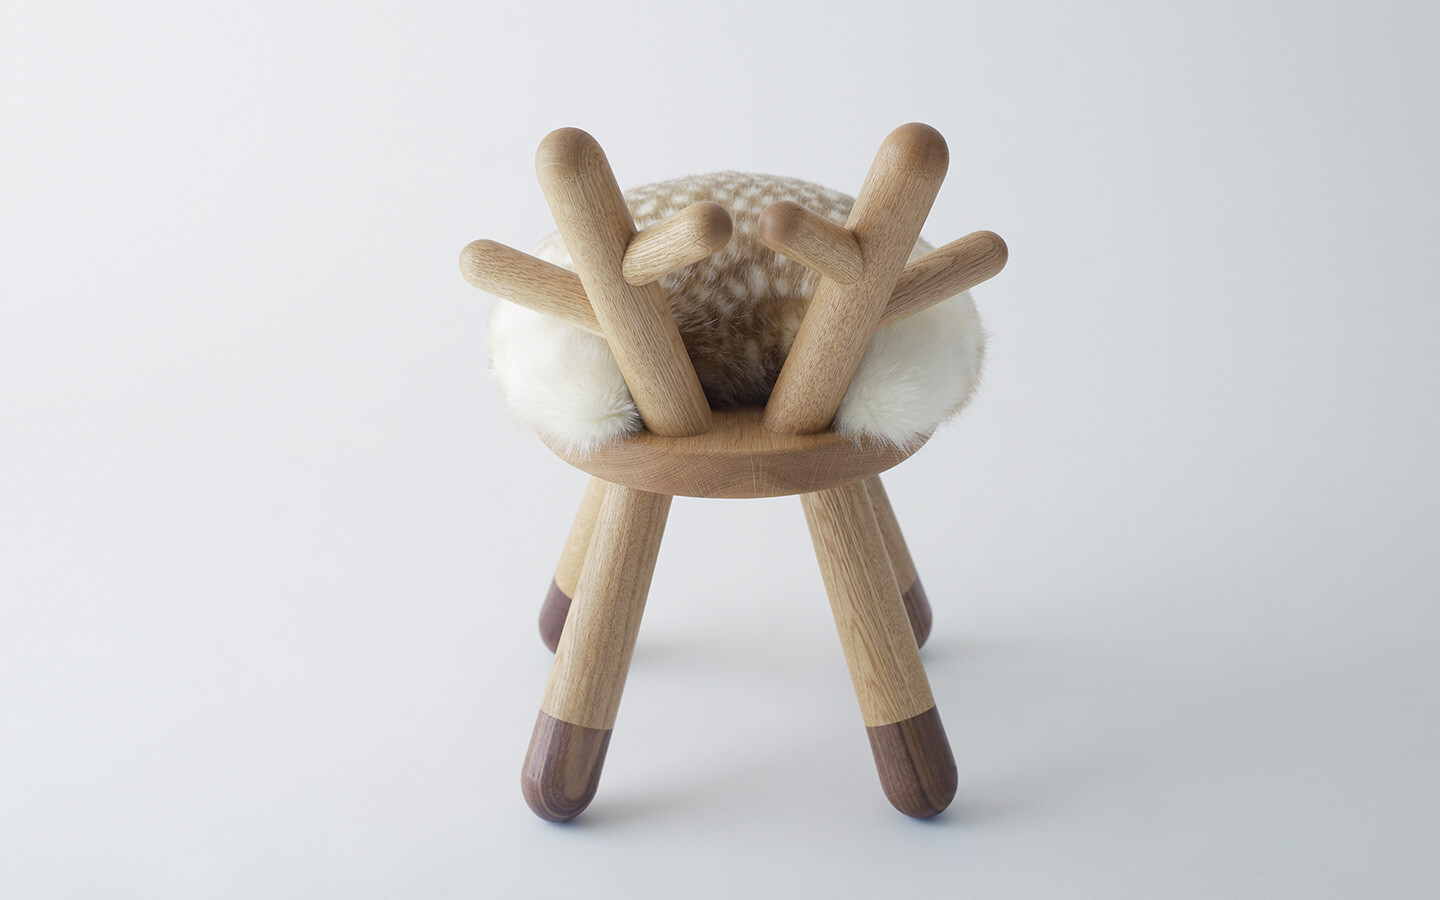 Collection of chairs-toys Takeshi Sawada bring joy to children - HomeWorldDesign (4)